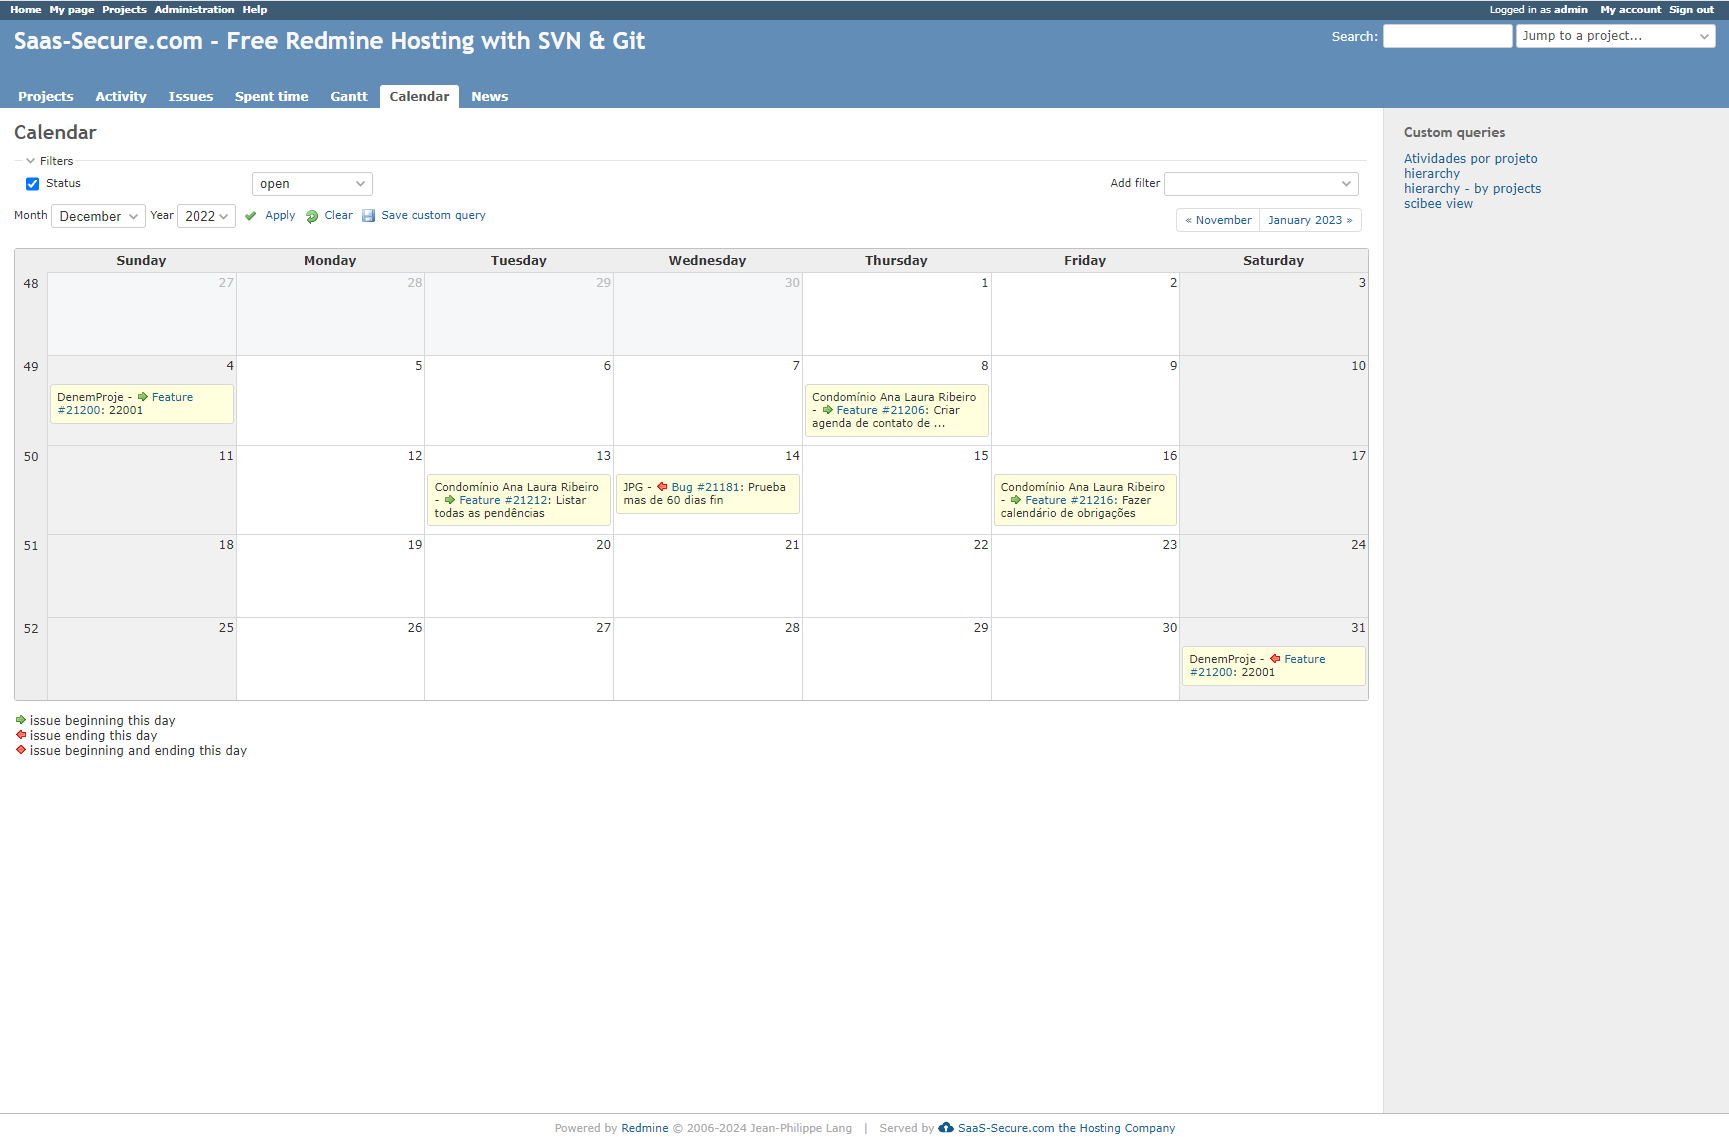 Calendar view with tasks